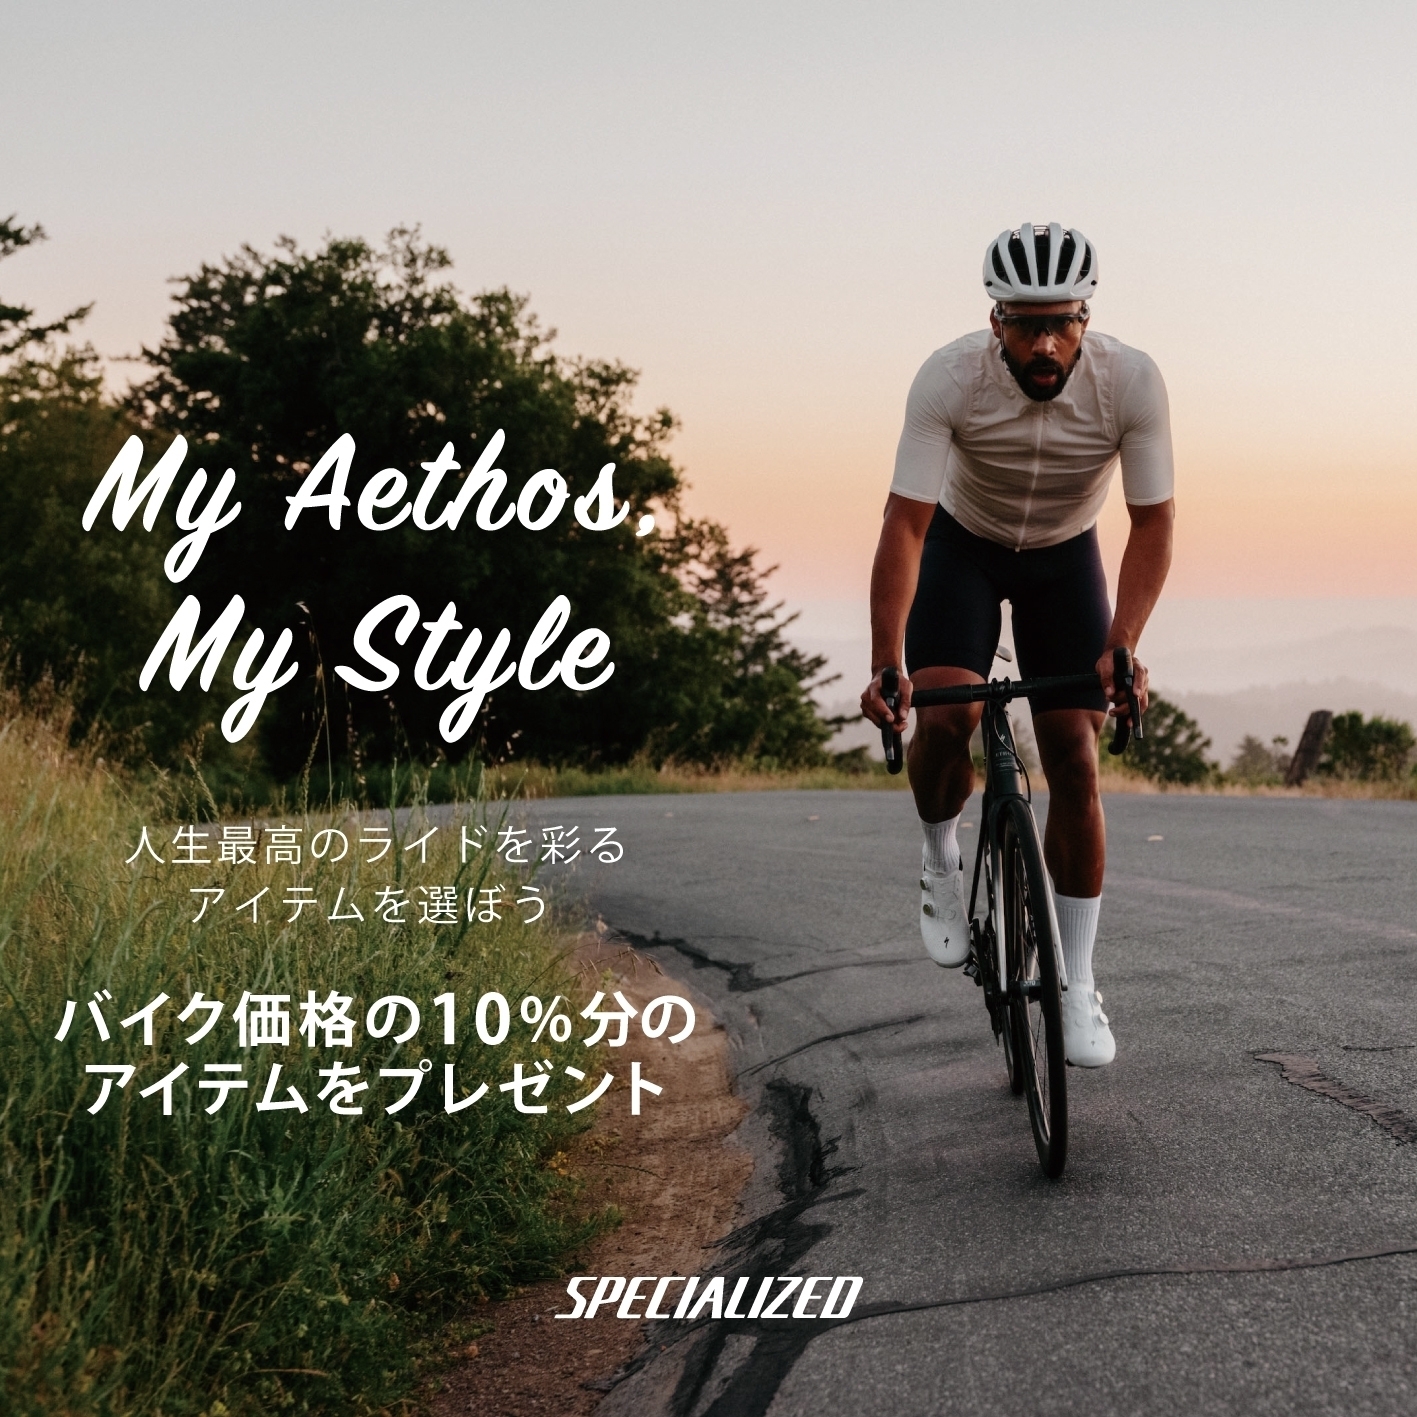 My Aethos , My Style キャンペーン